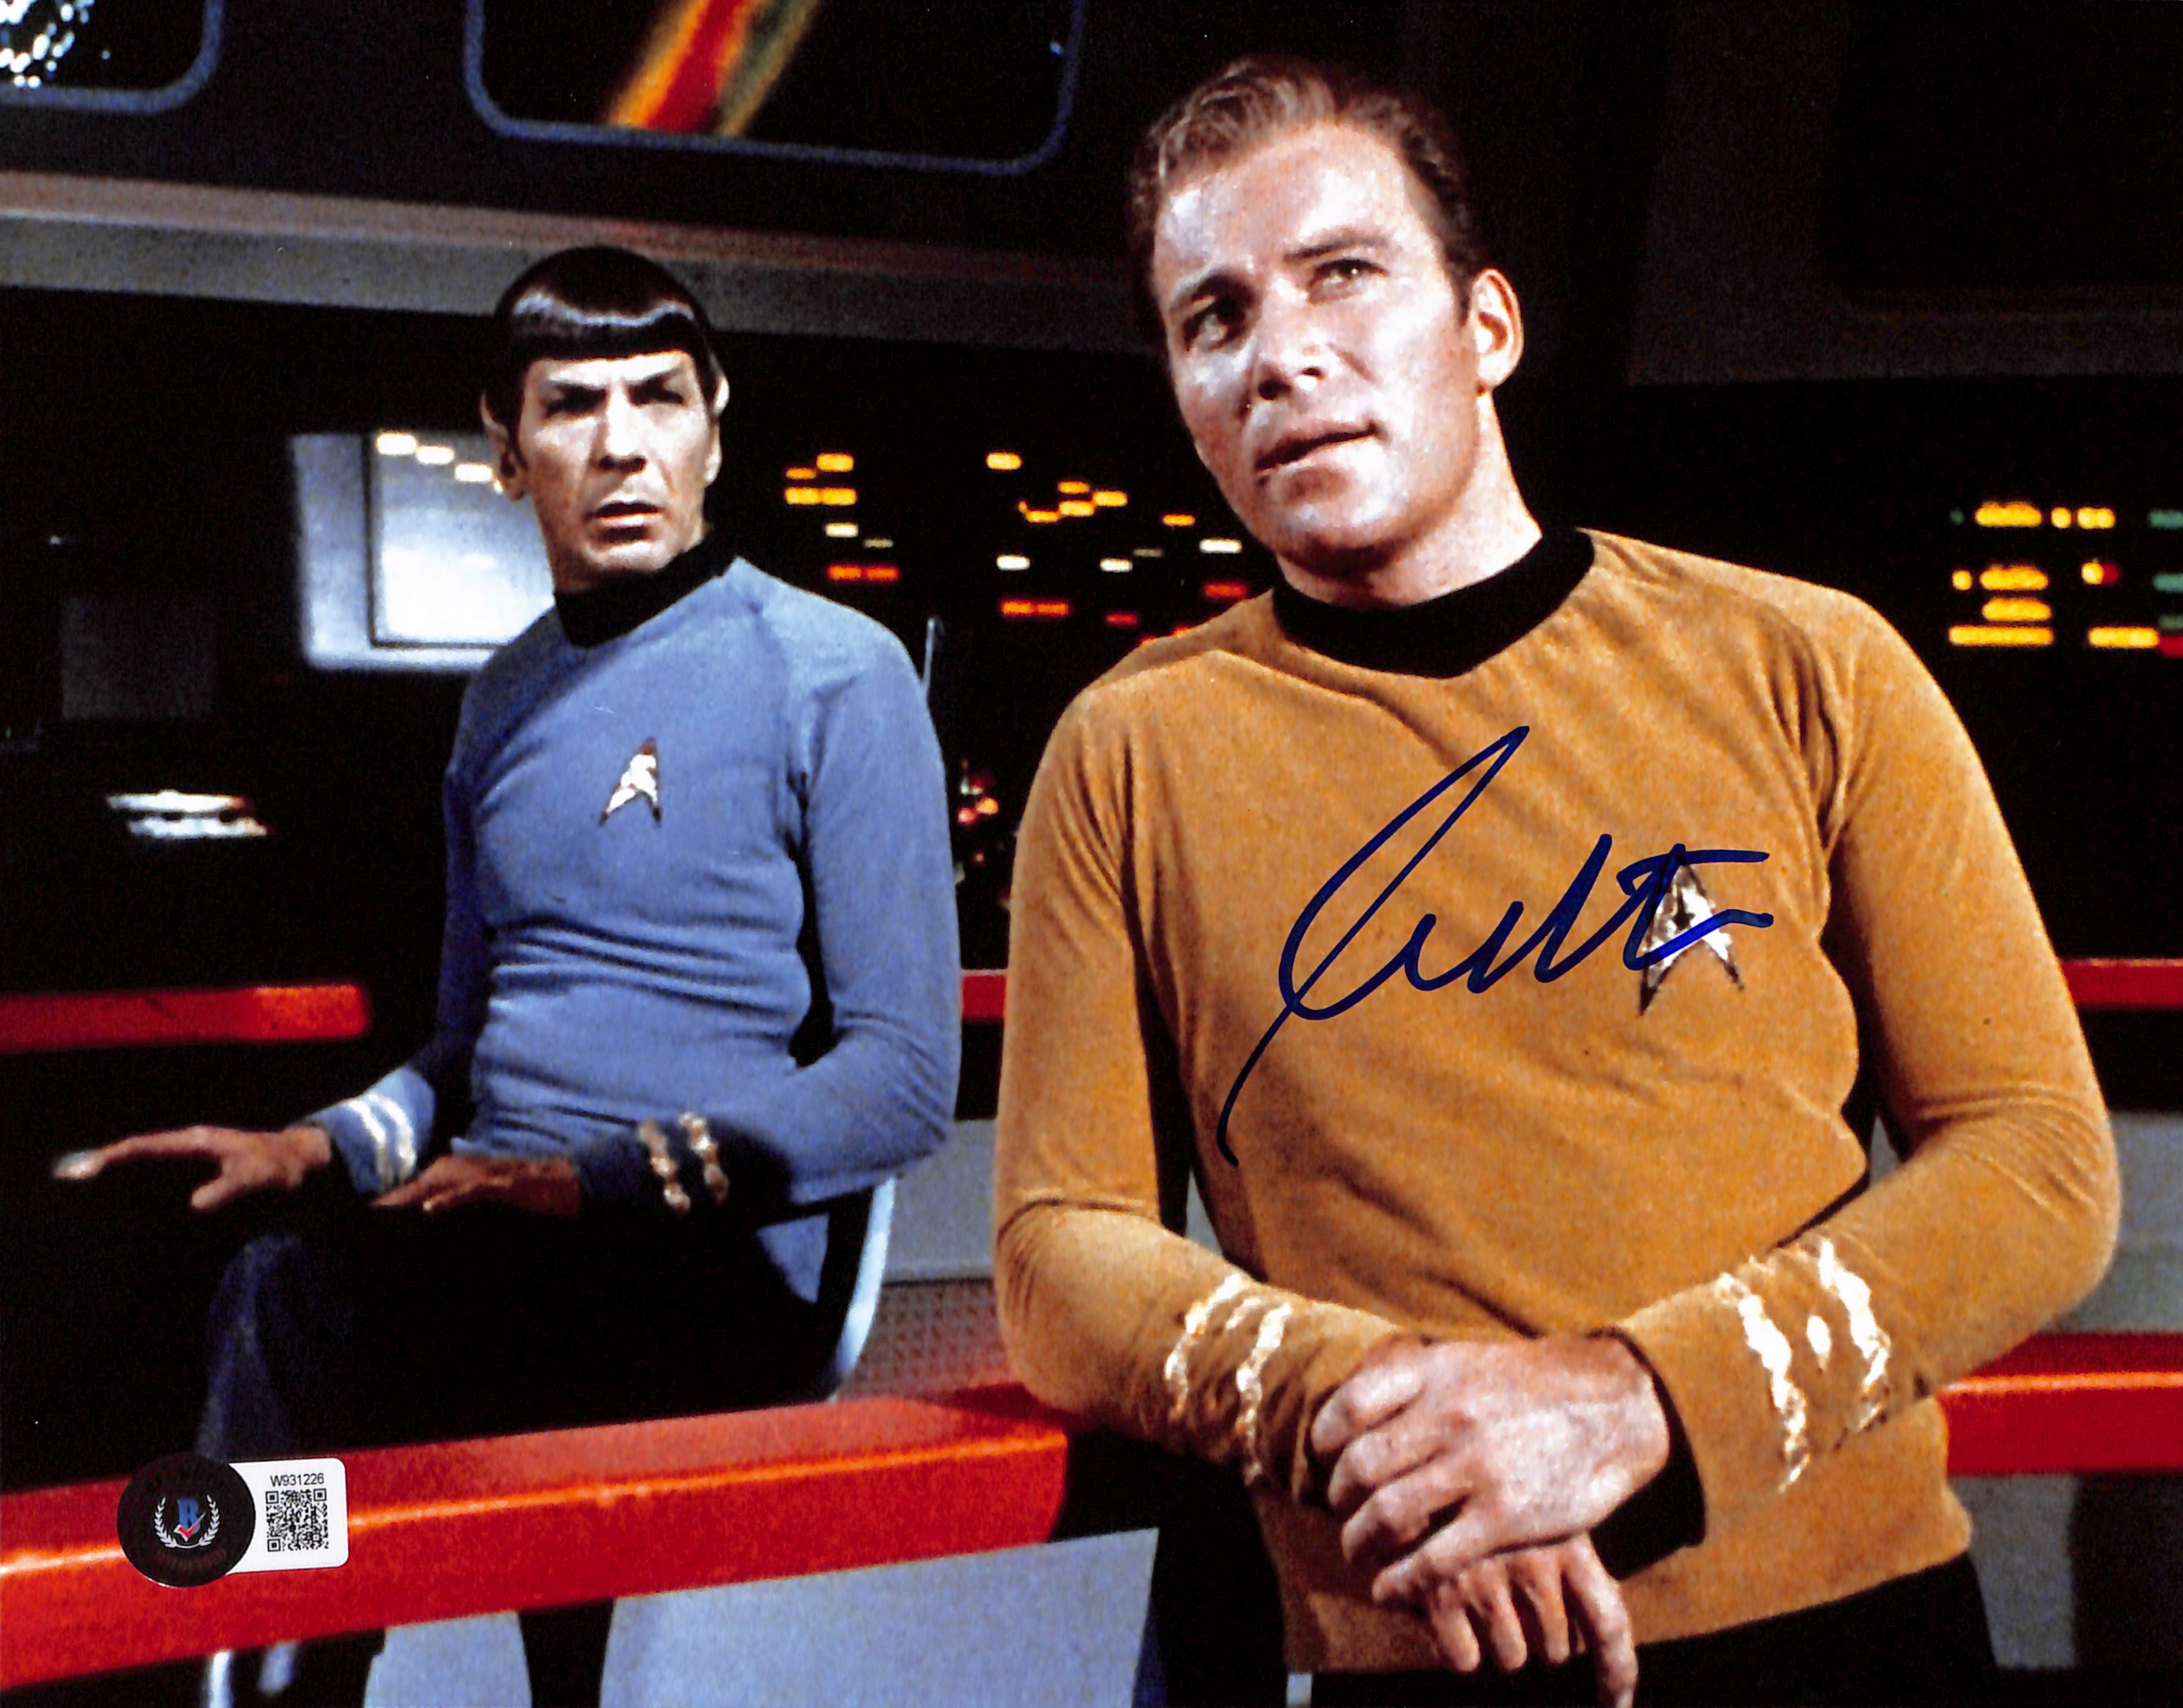 William Shatner Signed Star Trek 8x10 Photo Beckett 44535